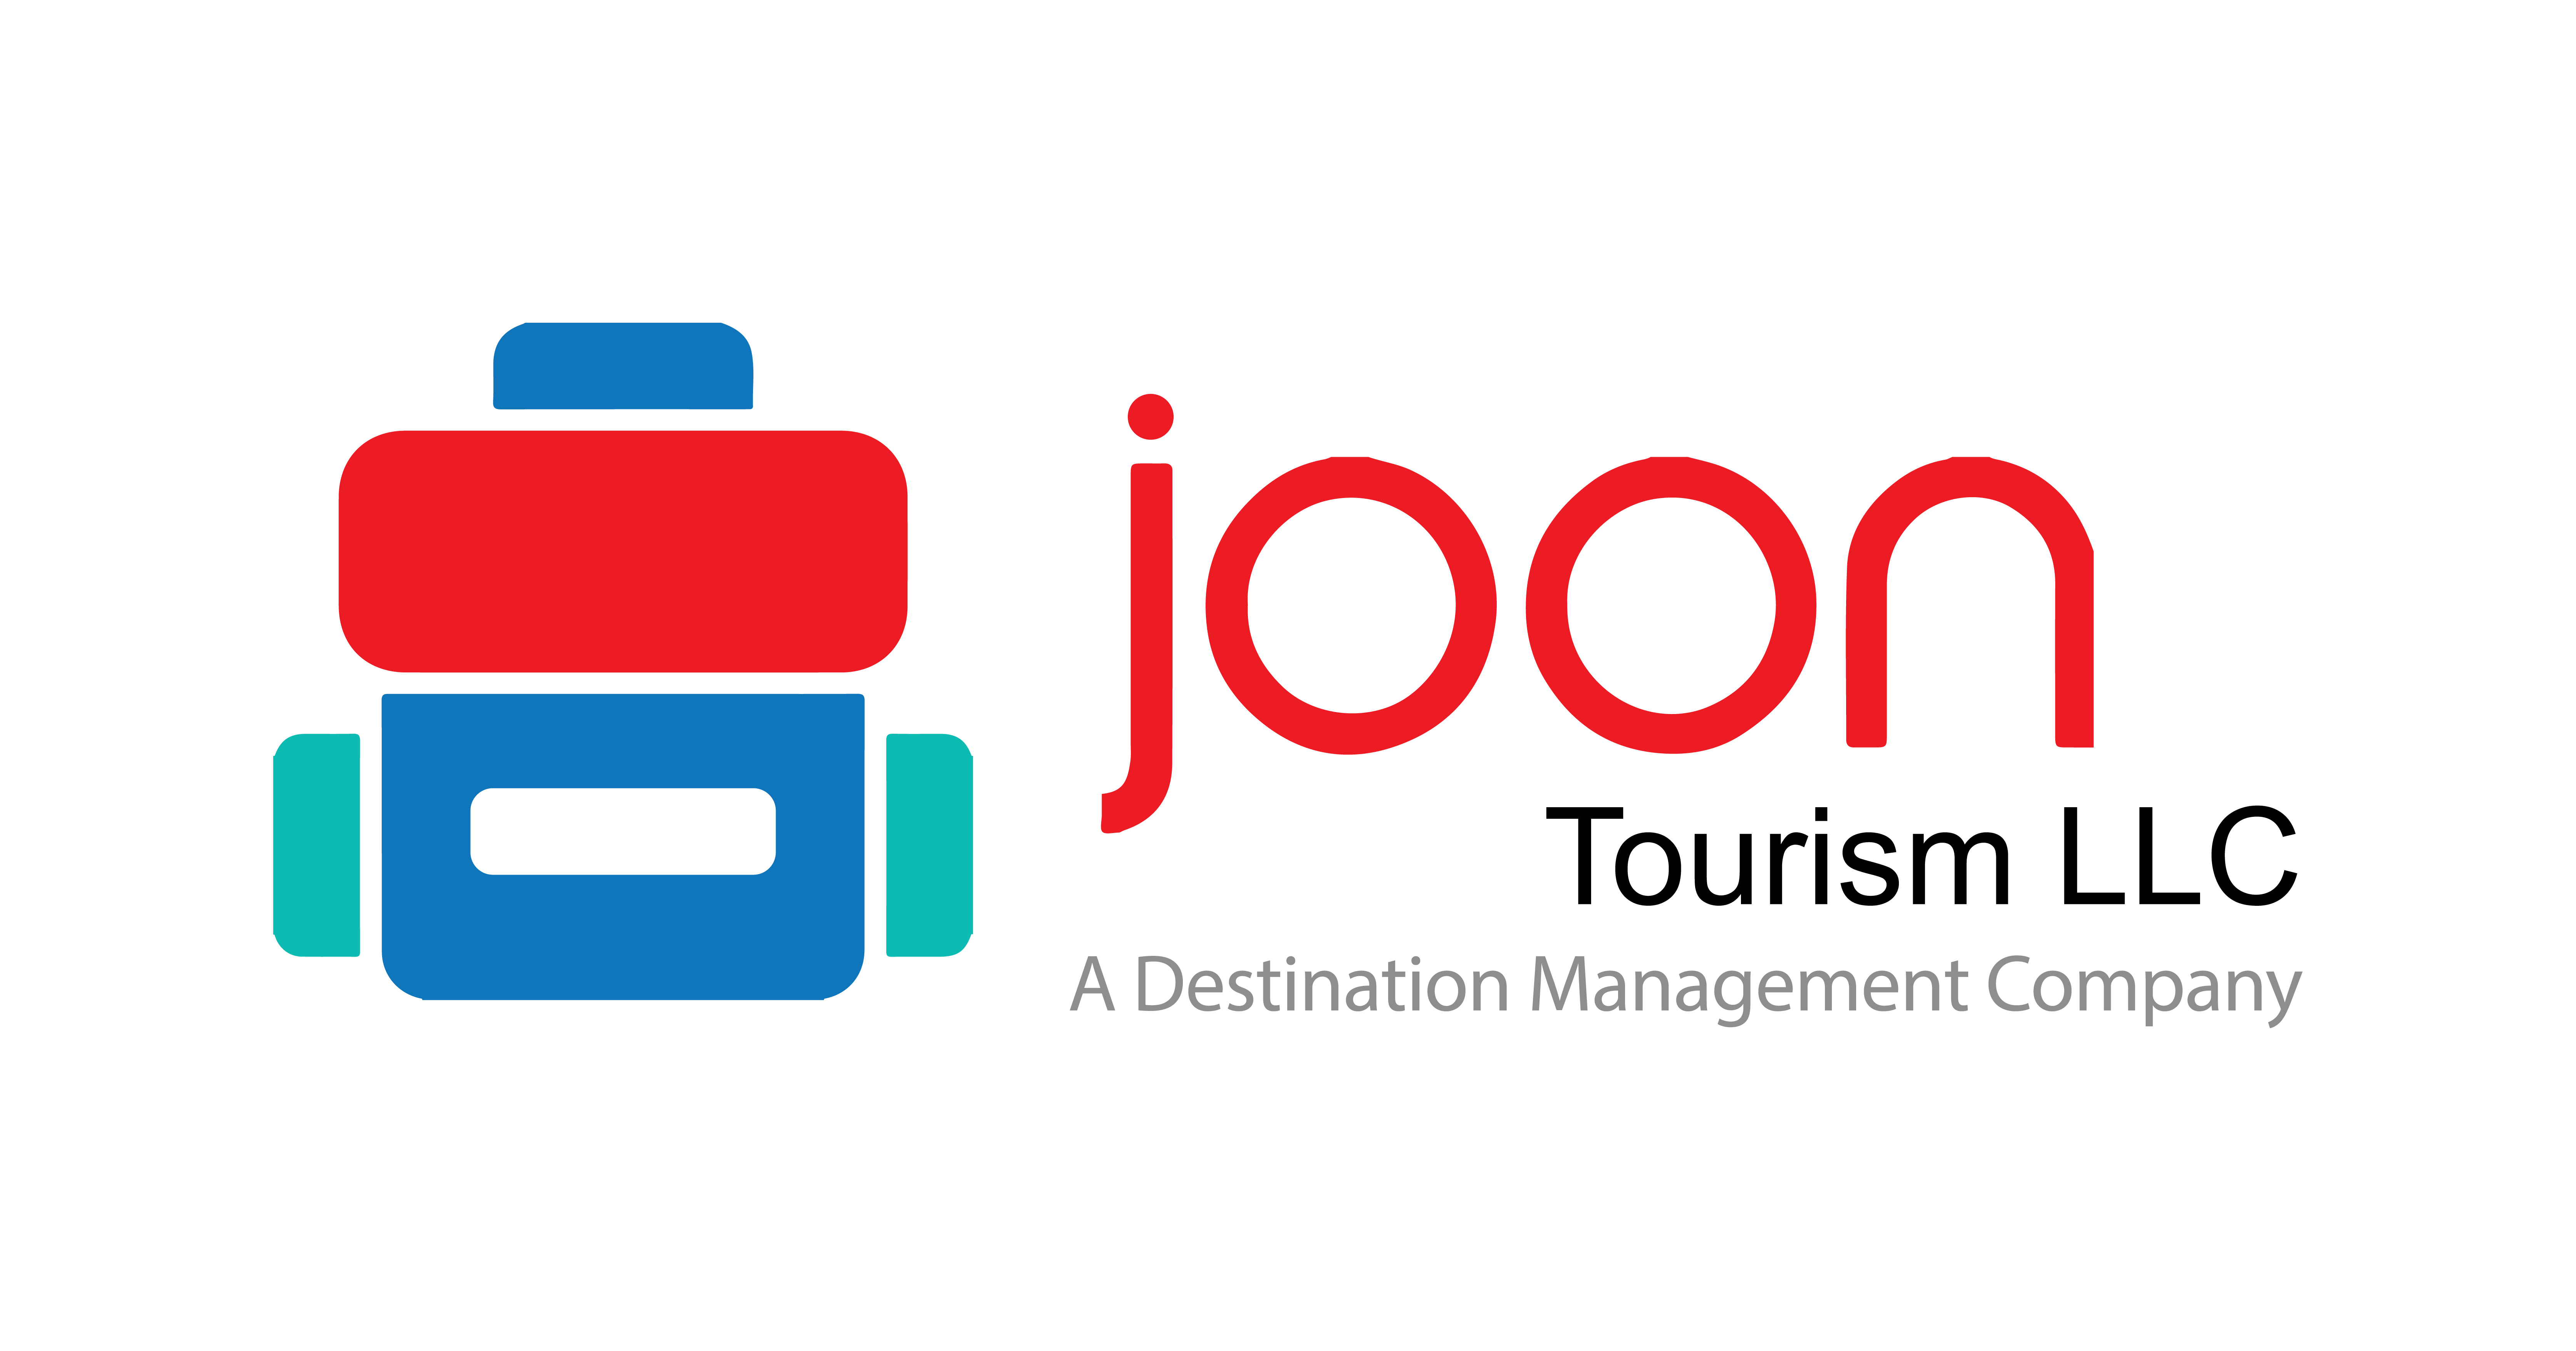 Joon Tourism LLC